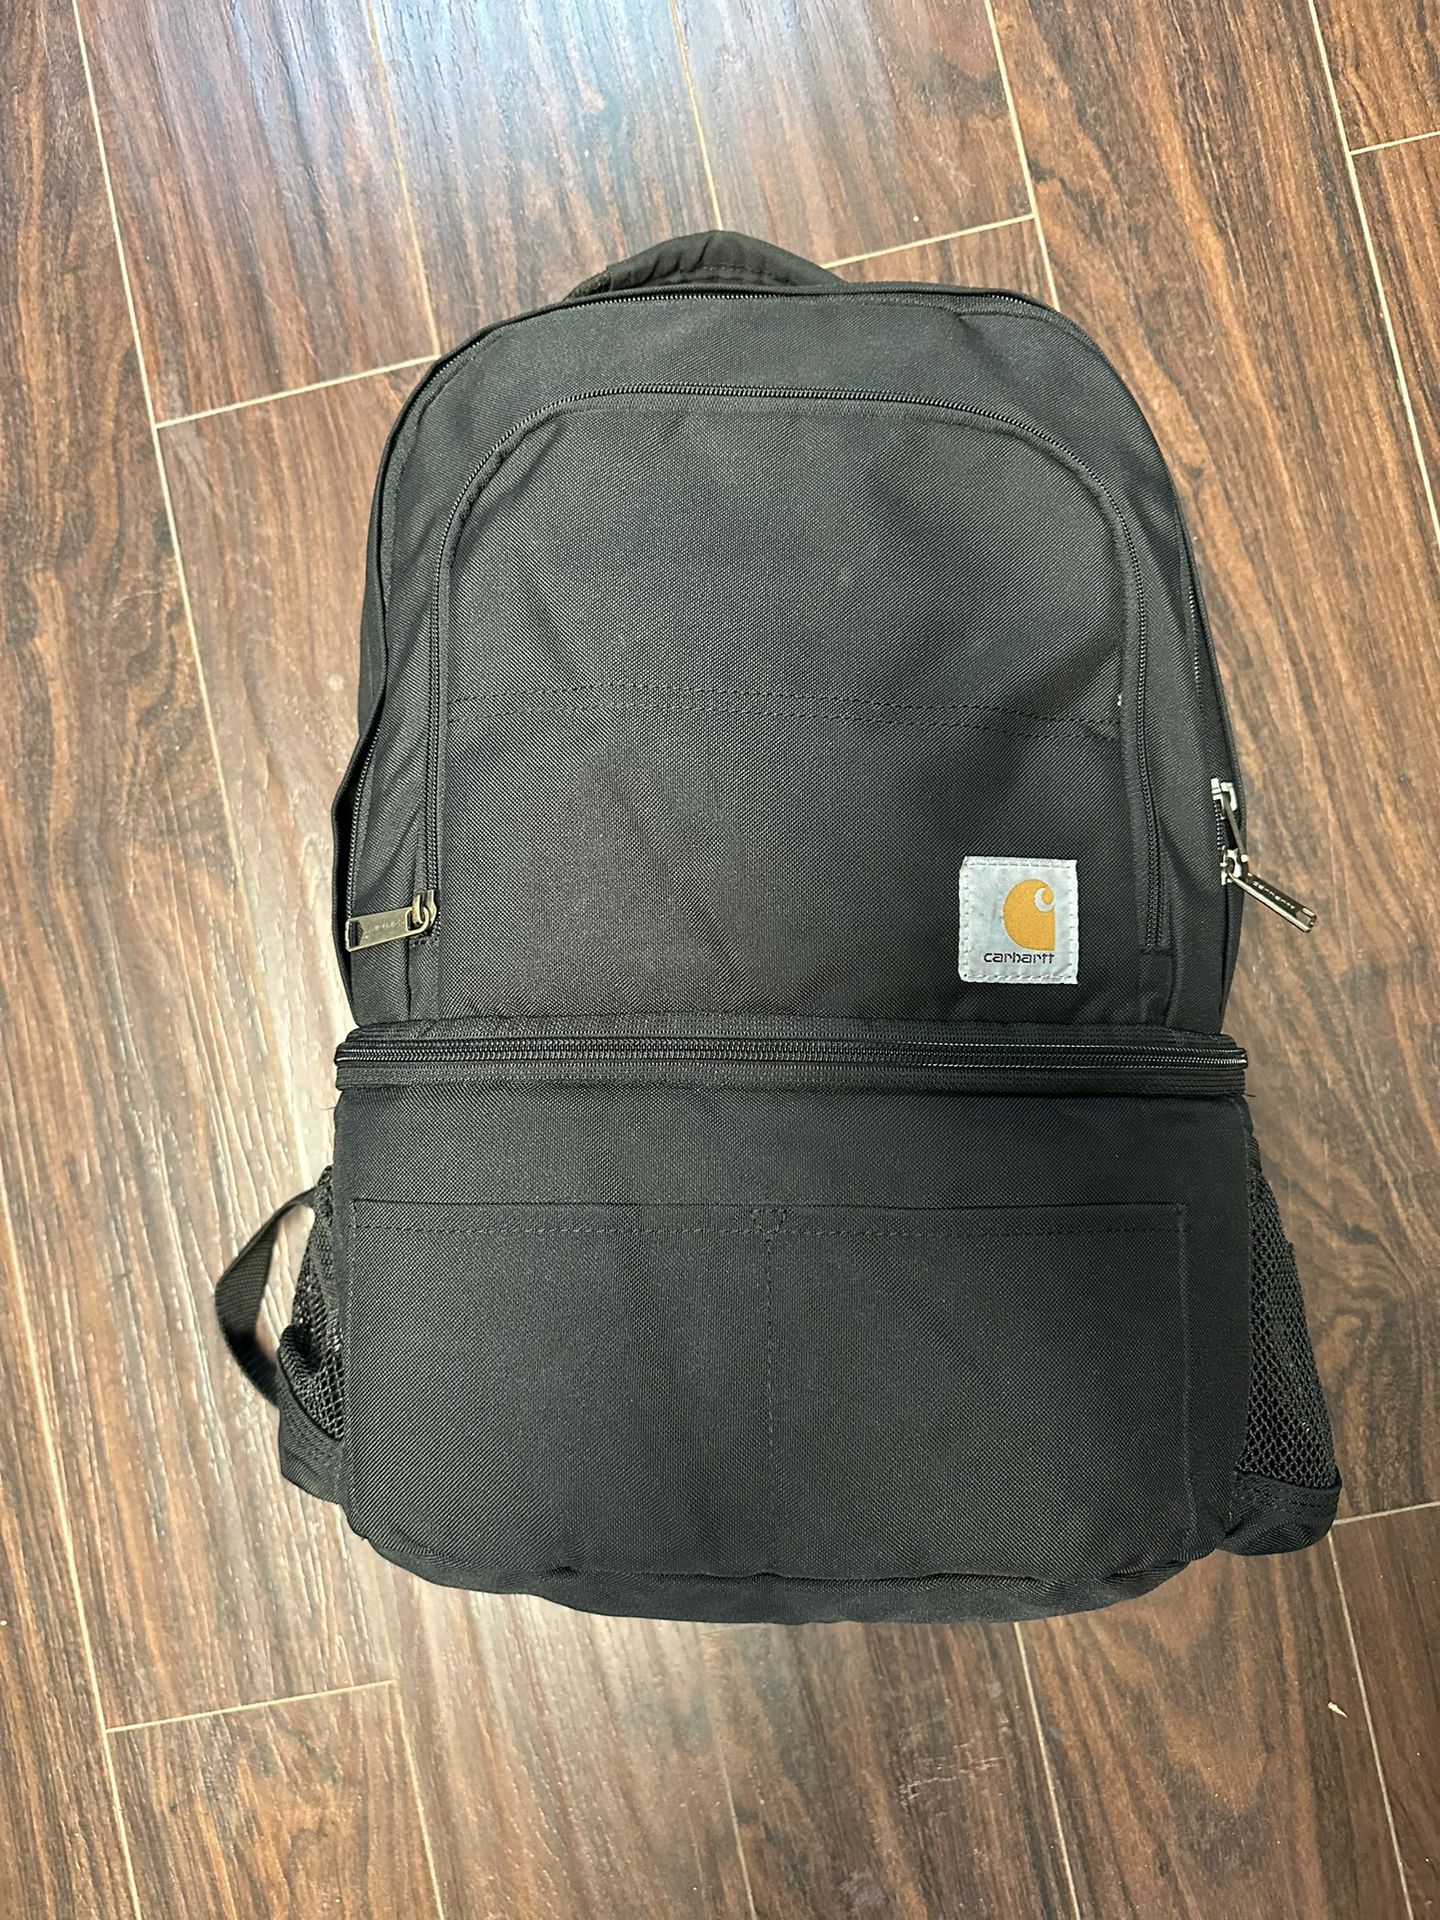 Carhartt Cooler Backpack